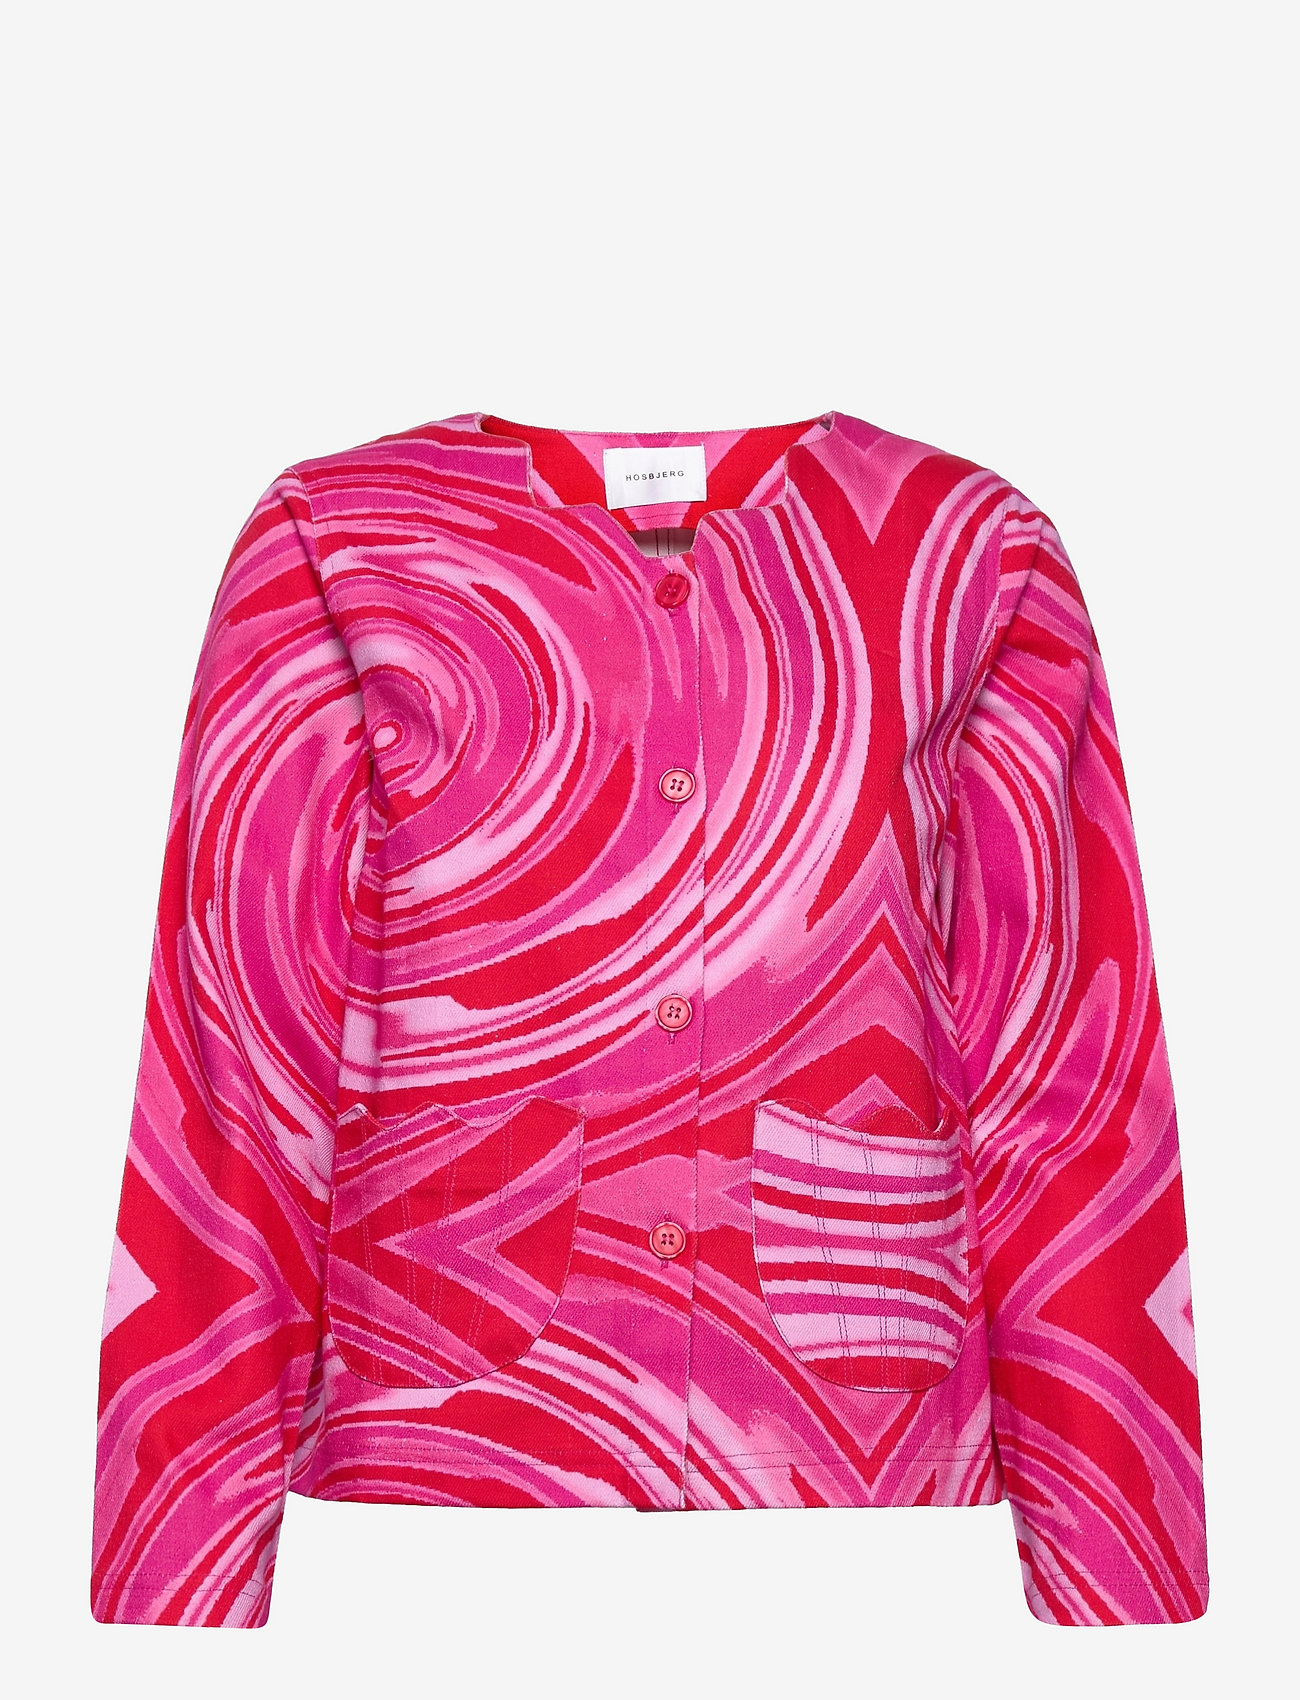 Hosbjerg - Frama Shirt - naised - swirl pink - 0